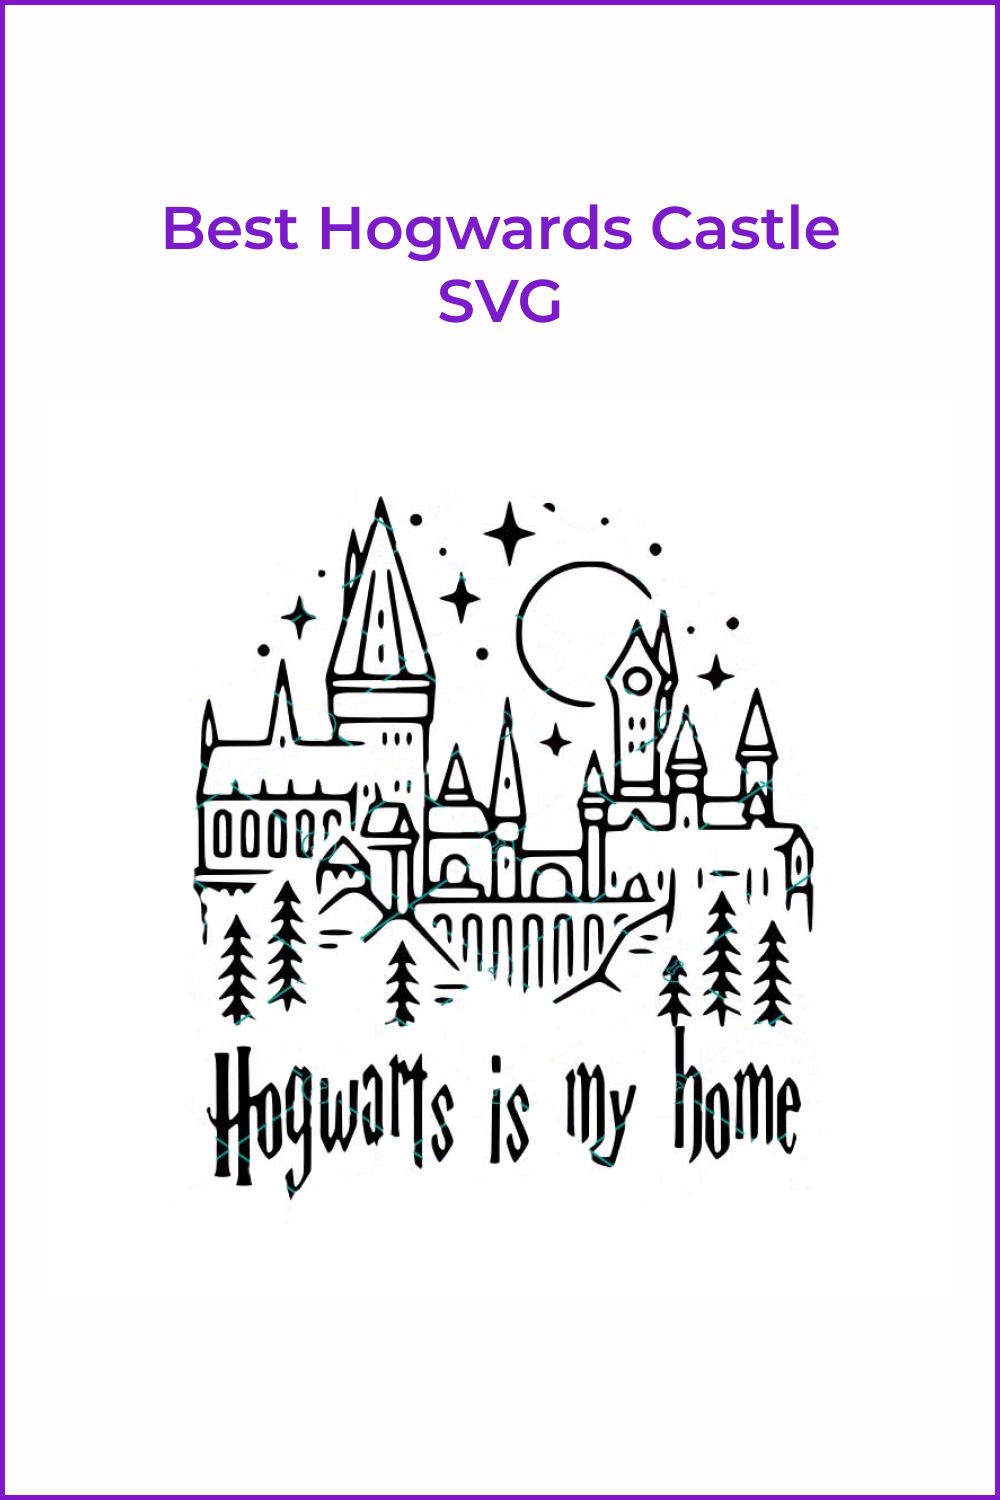 Hogwarts castle silhouette image.